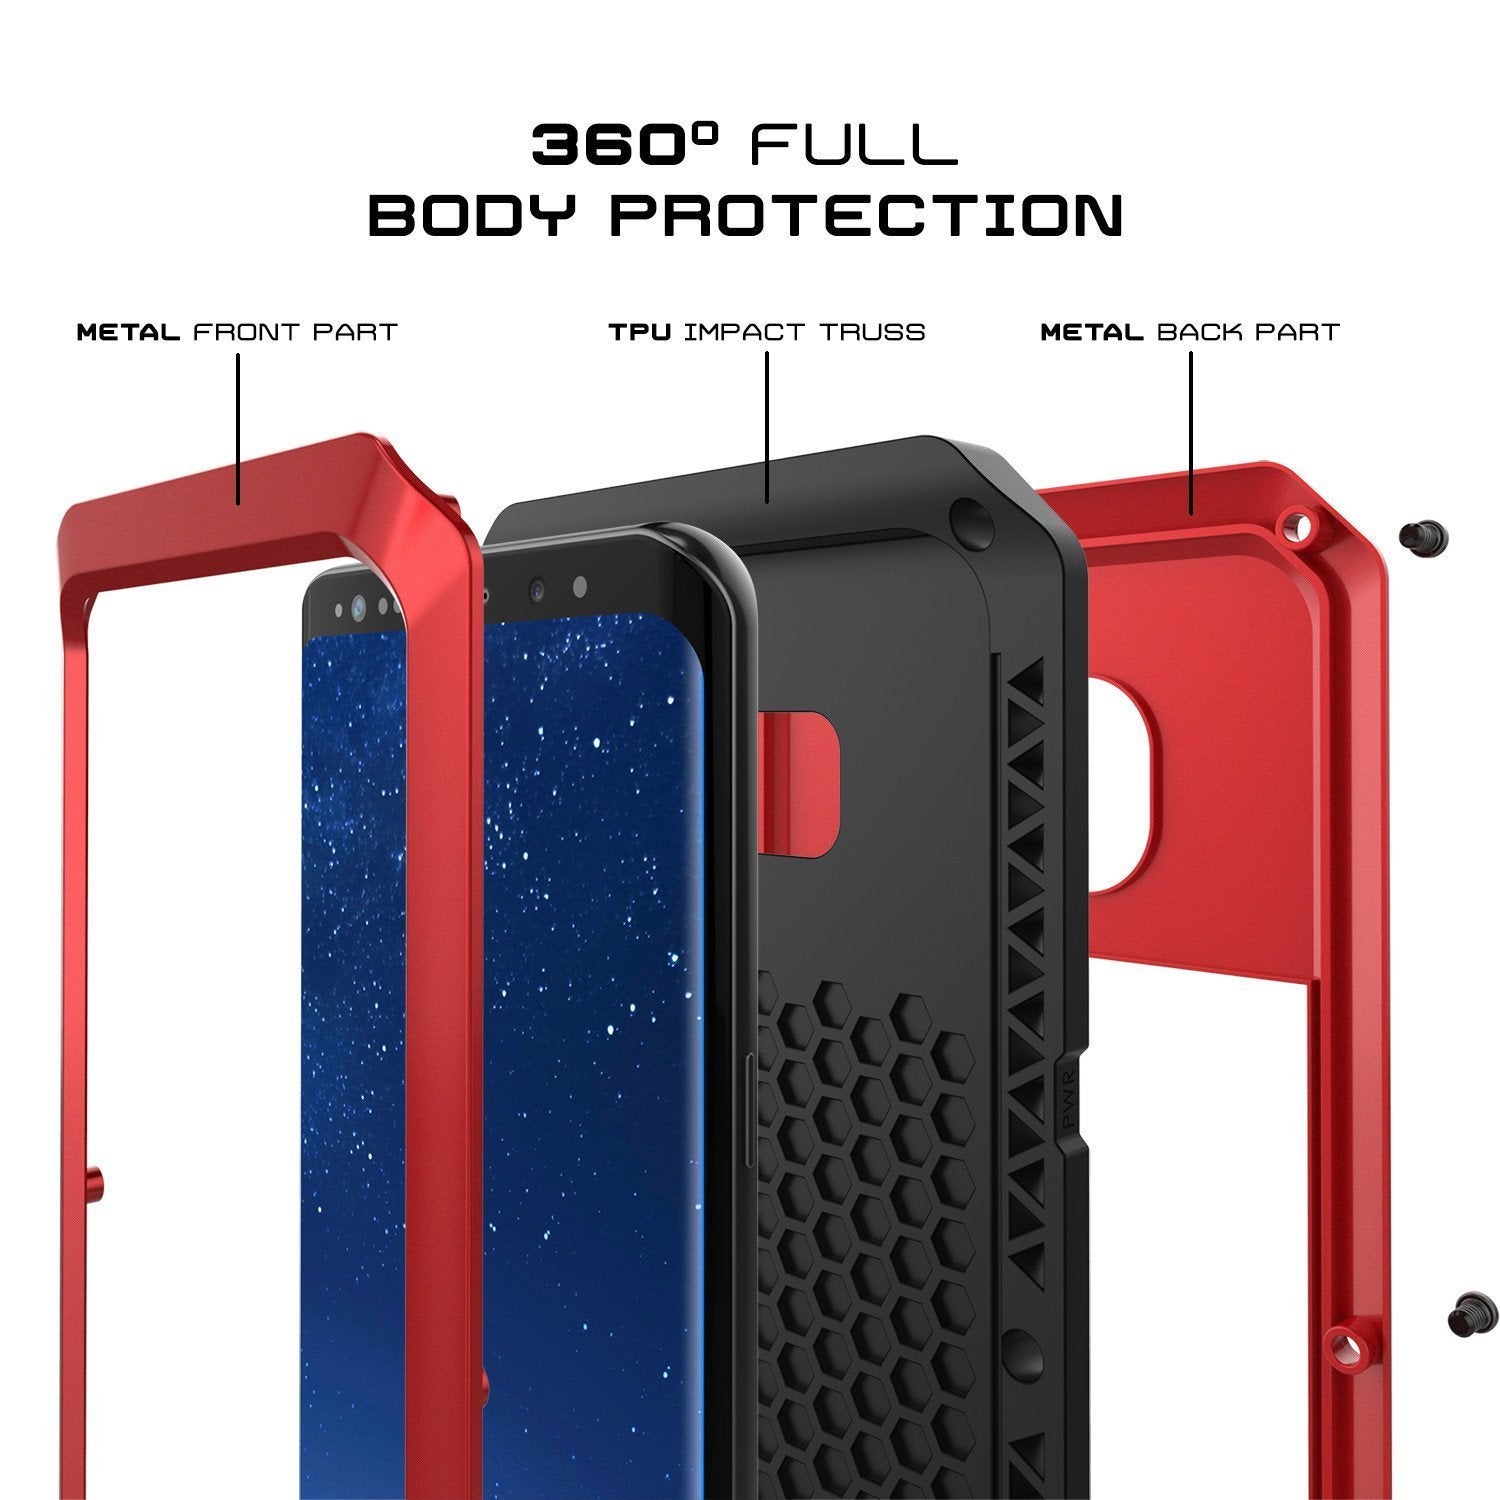 Galaxy Note 8  Case, PUNKcase Metallic Red Shockproof  Slim Metal Armor Case - PunkCase NZ